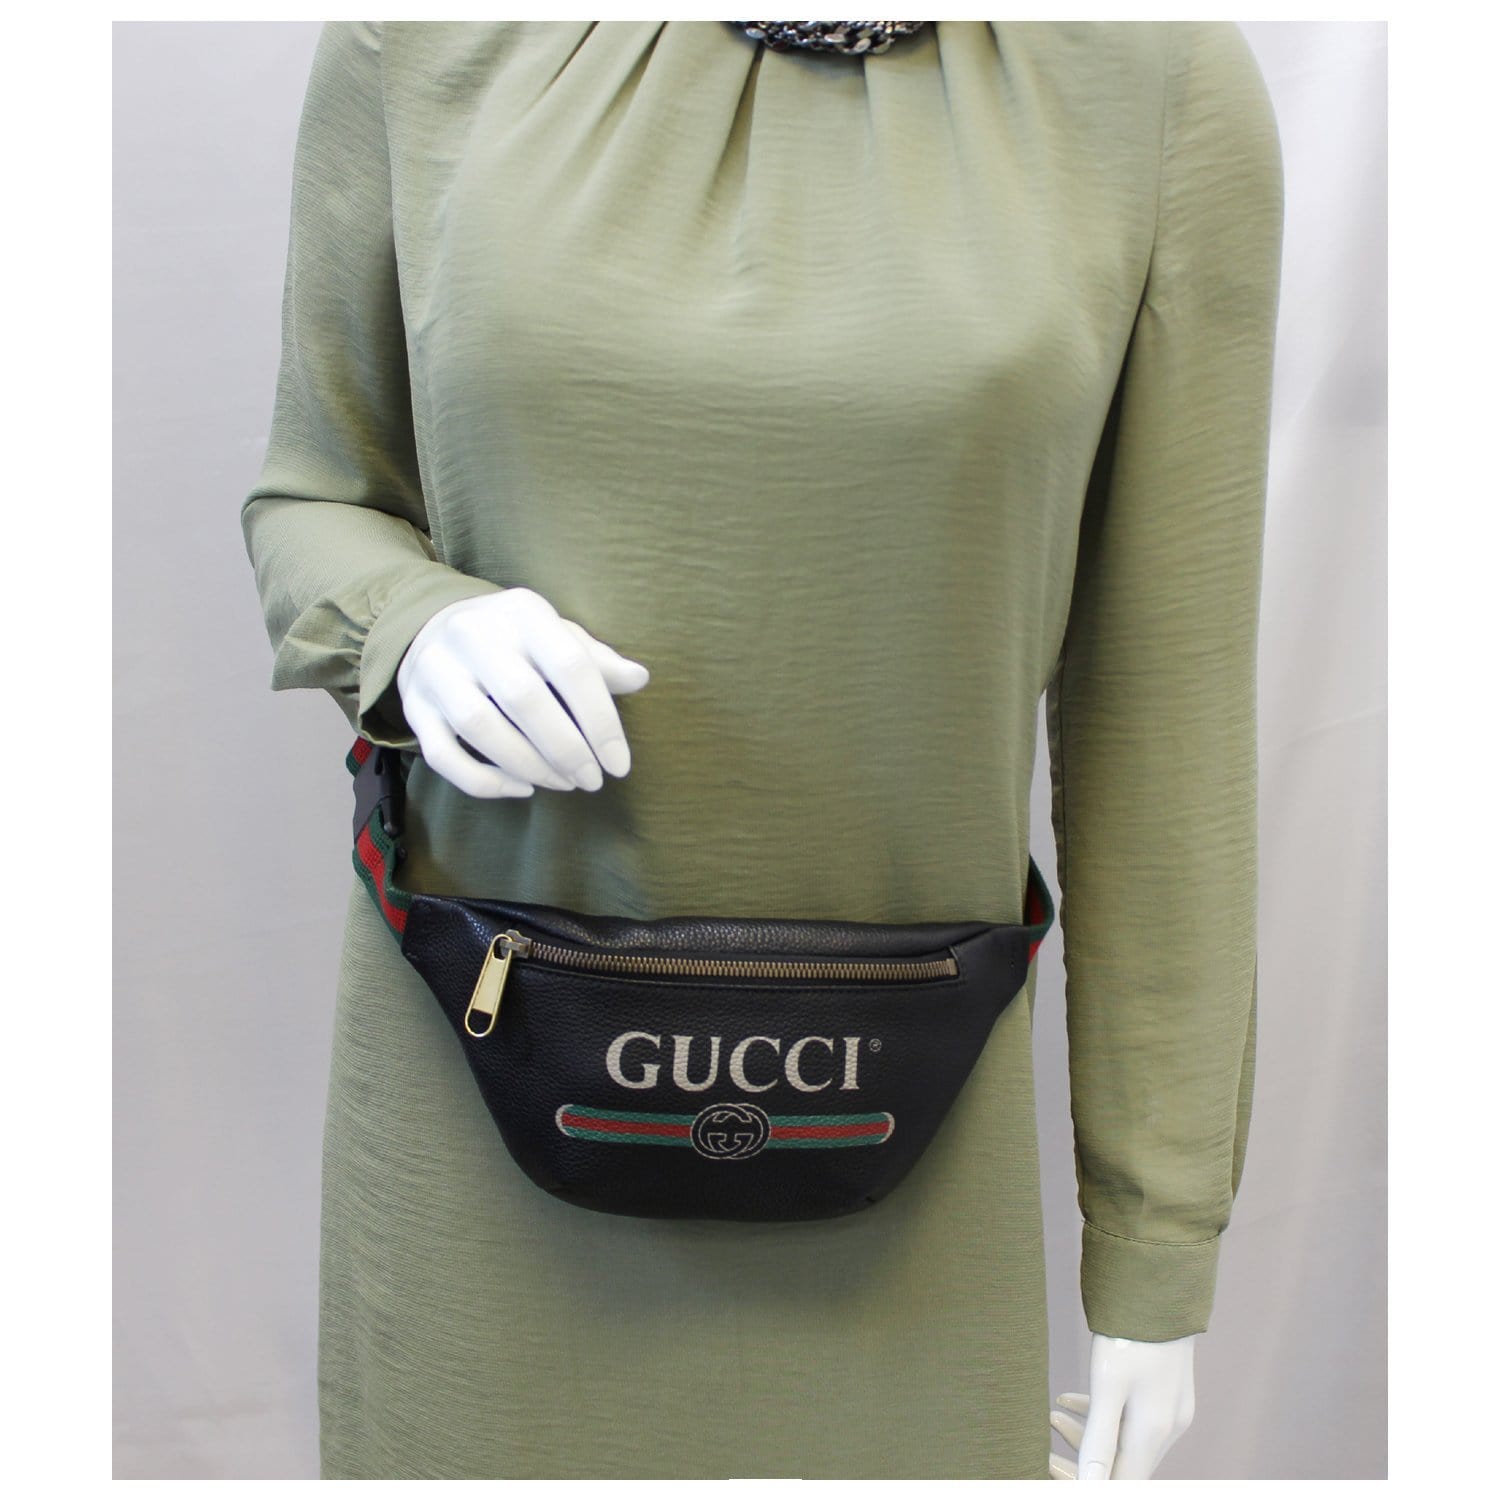 GUCCI Print Leather Black Belt Waist Bum Bag Medium 530412-US